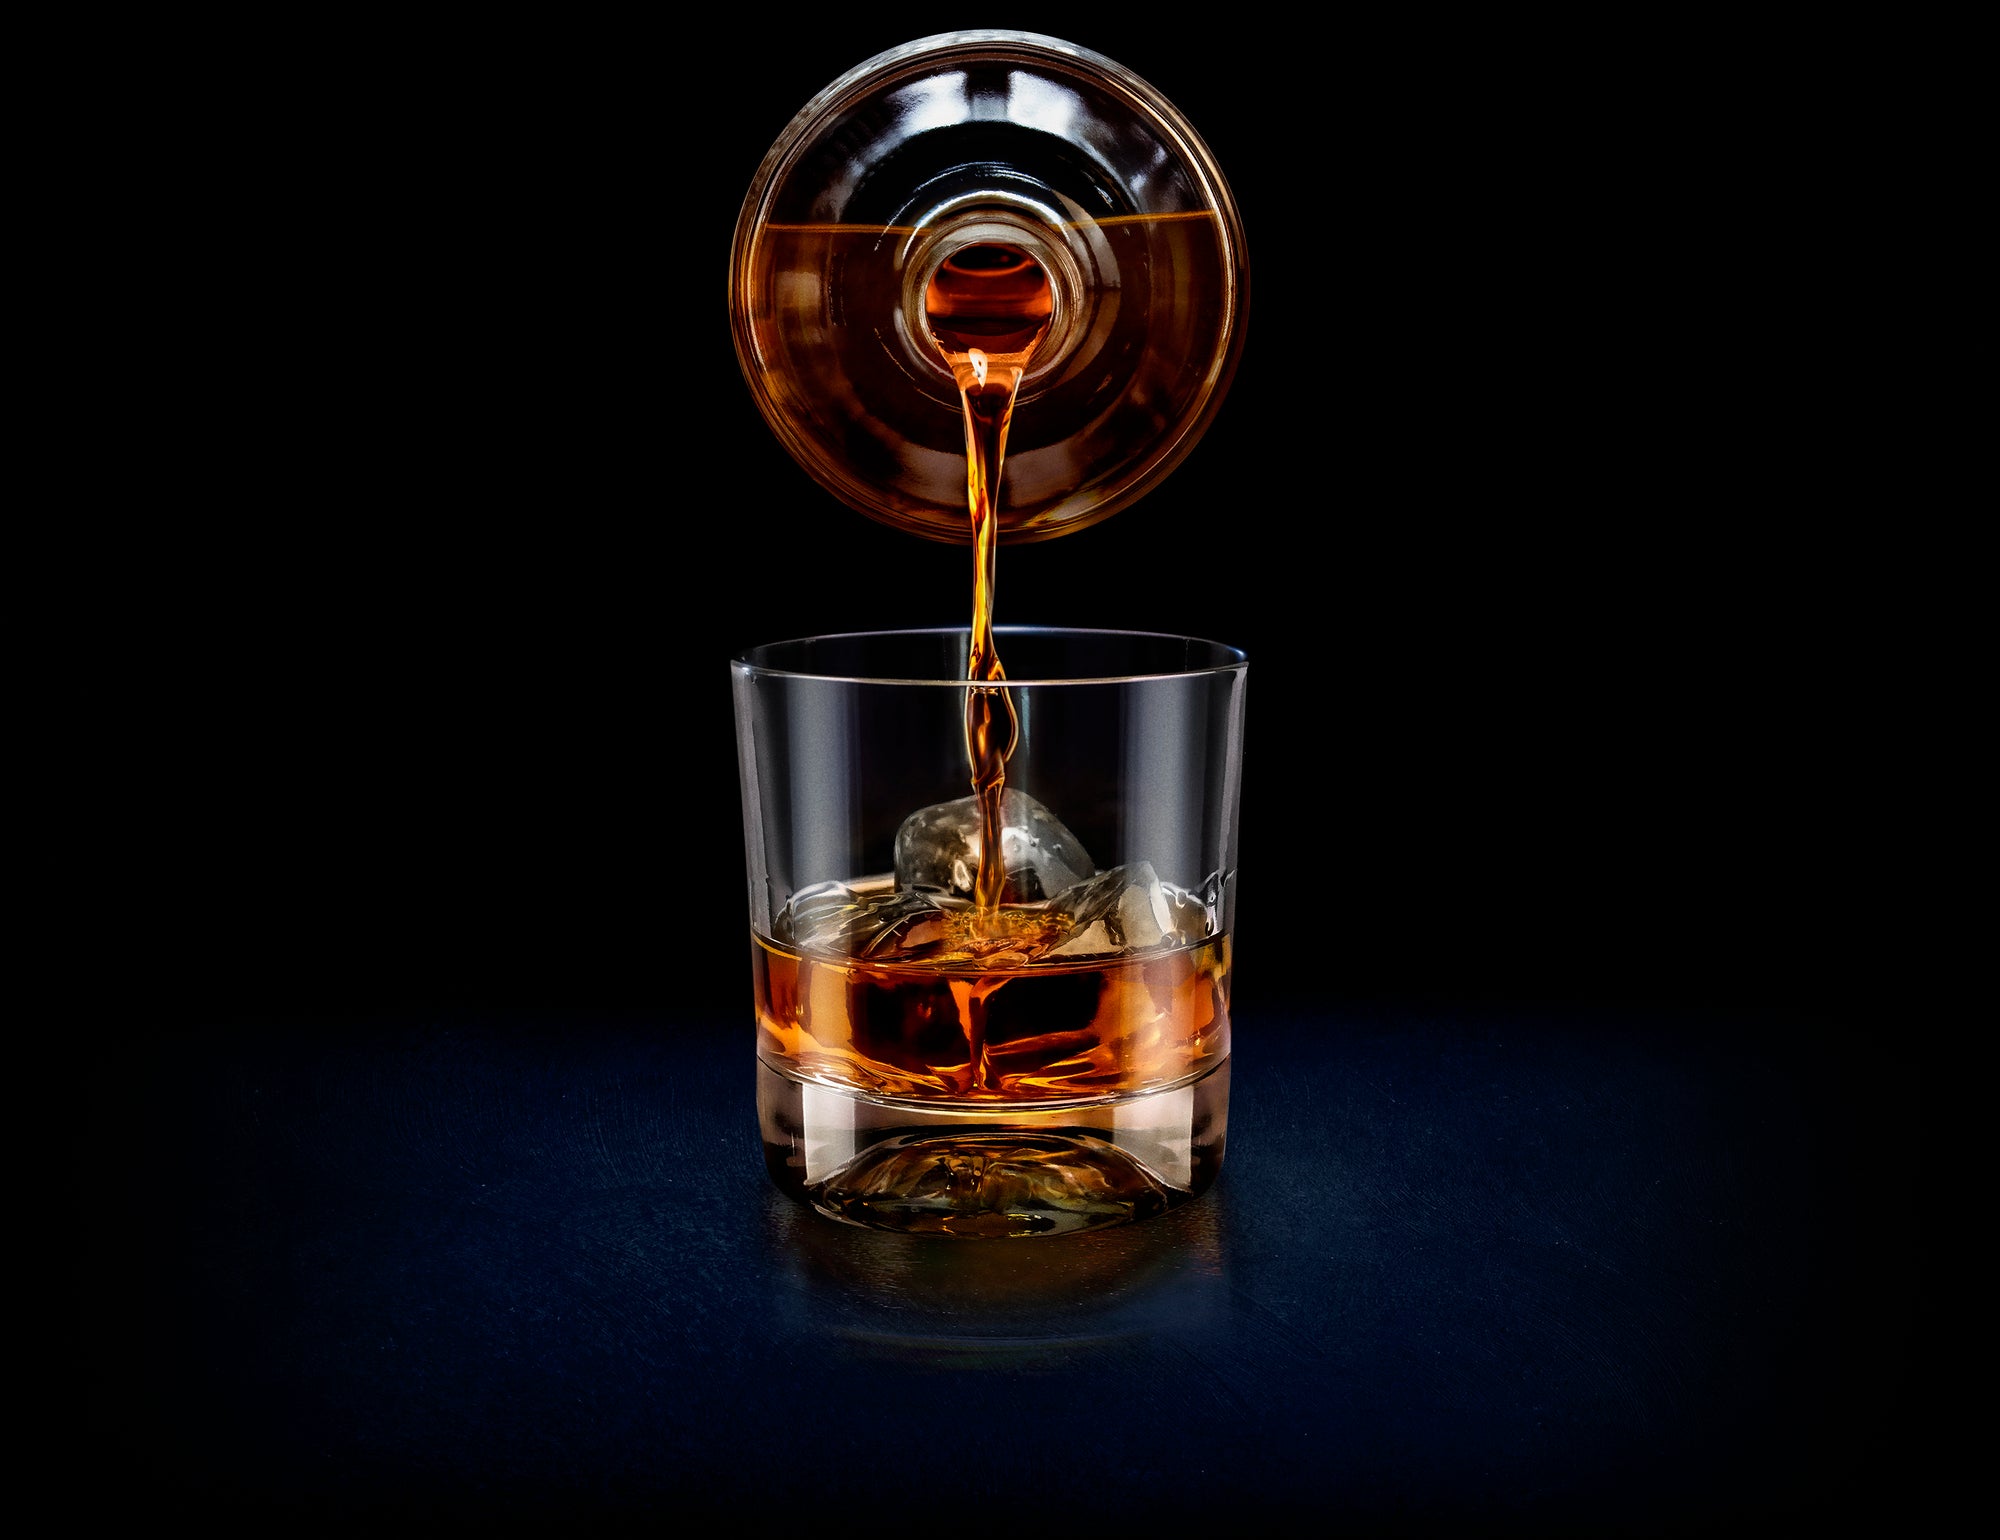 Whisky The Guiligan’s gana medalla de oro en importante concurso internacional